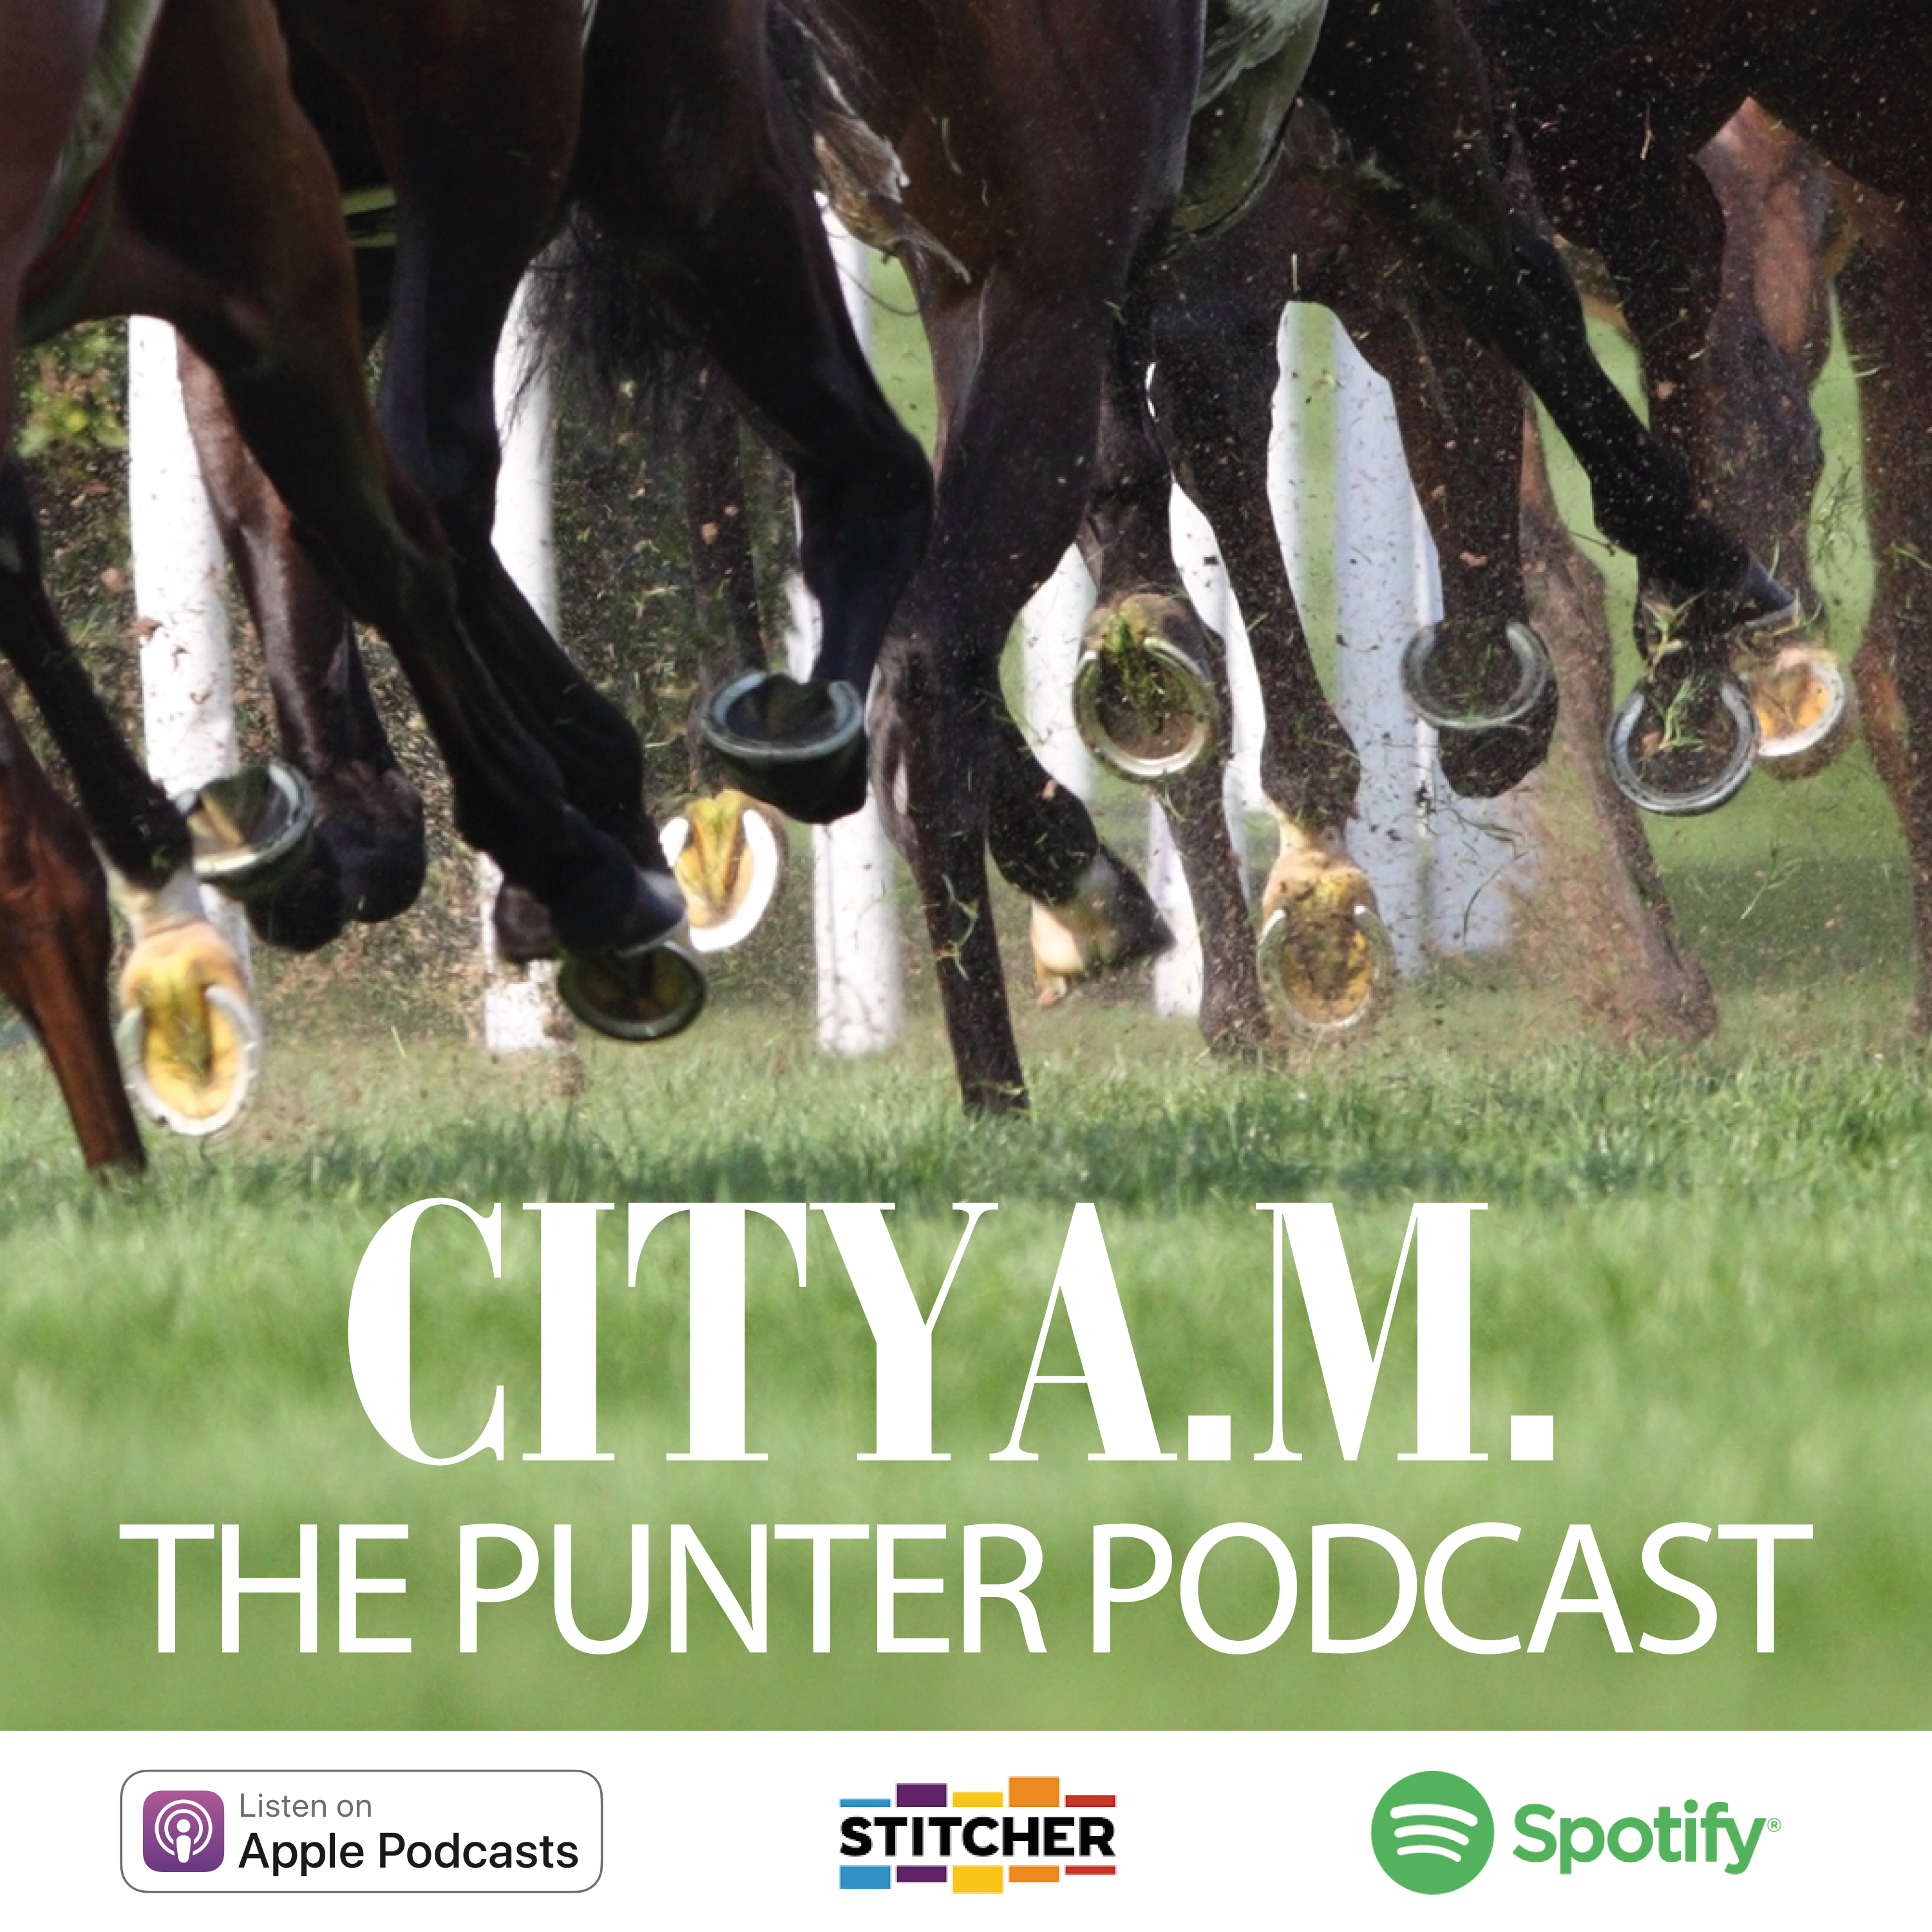 February 18th - Punter Podcast Summary